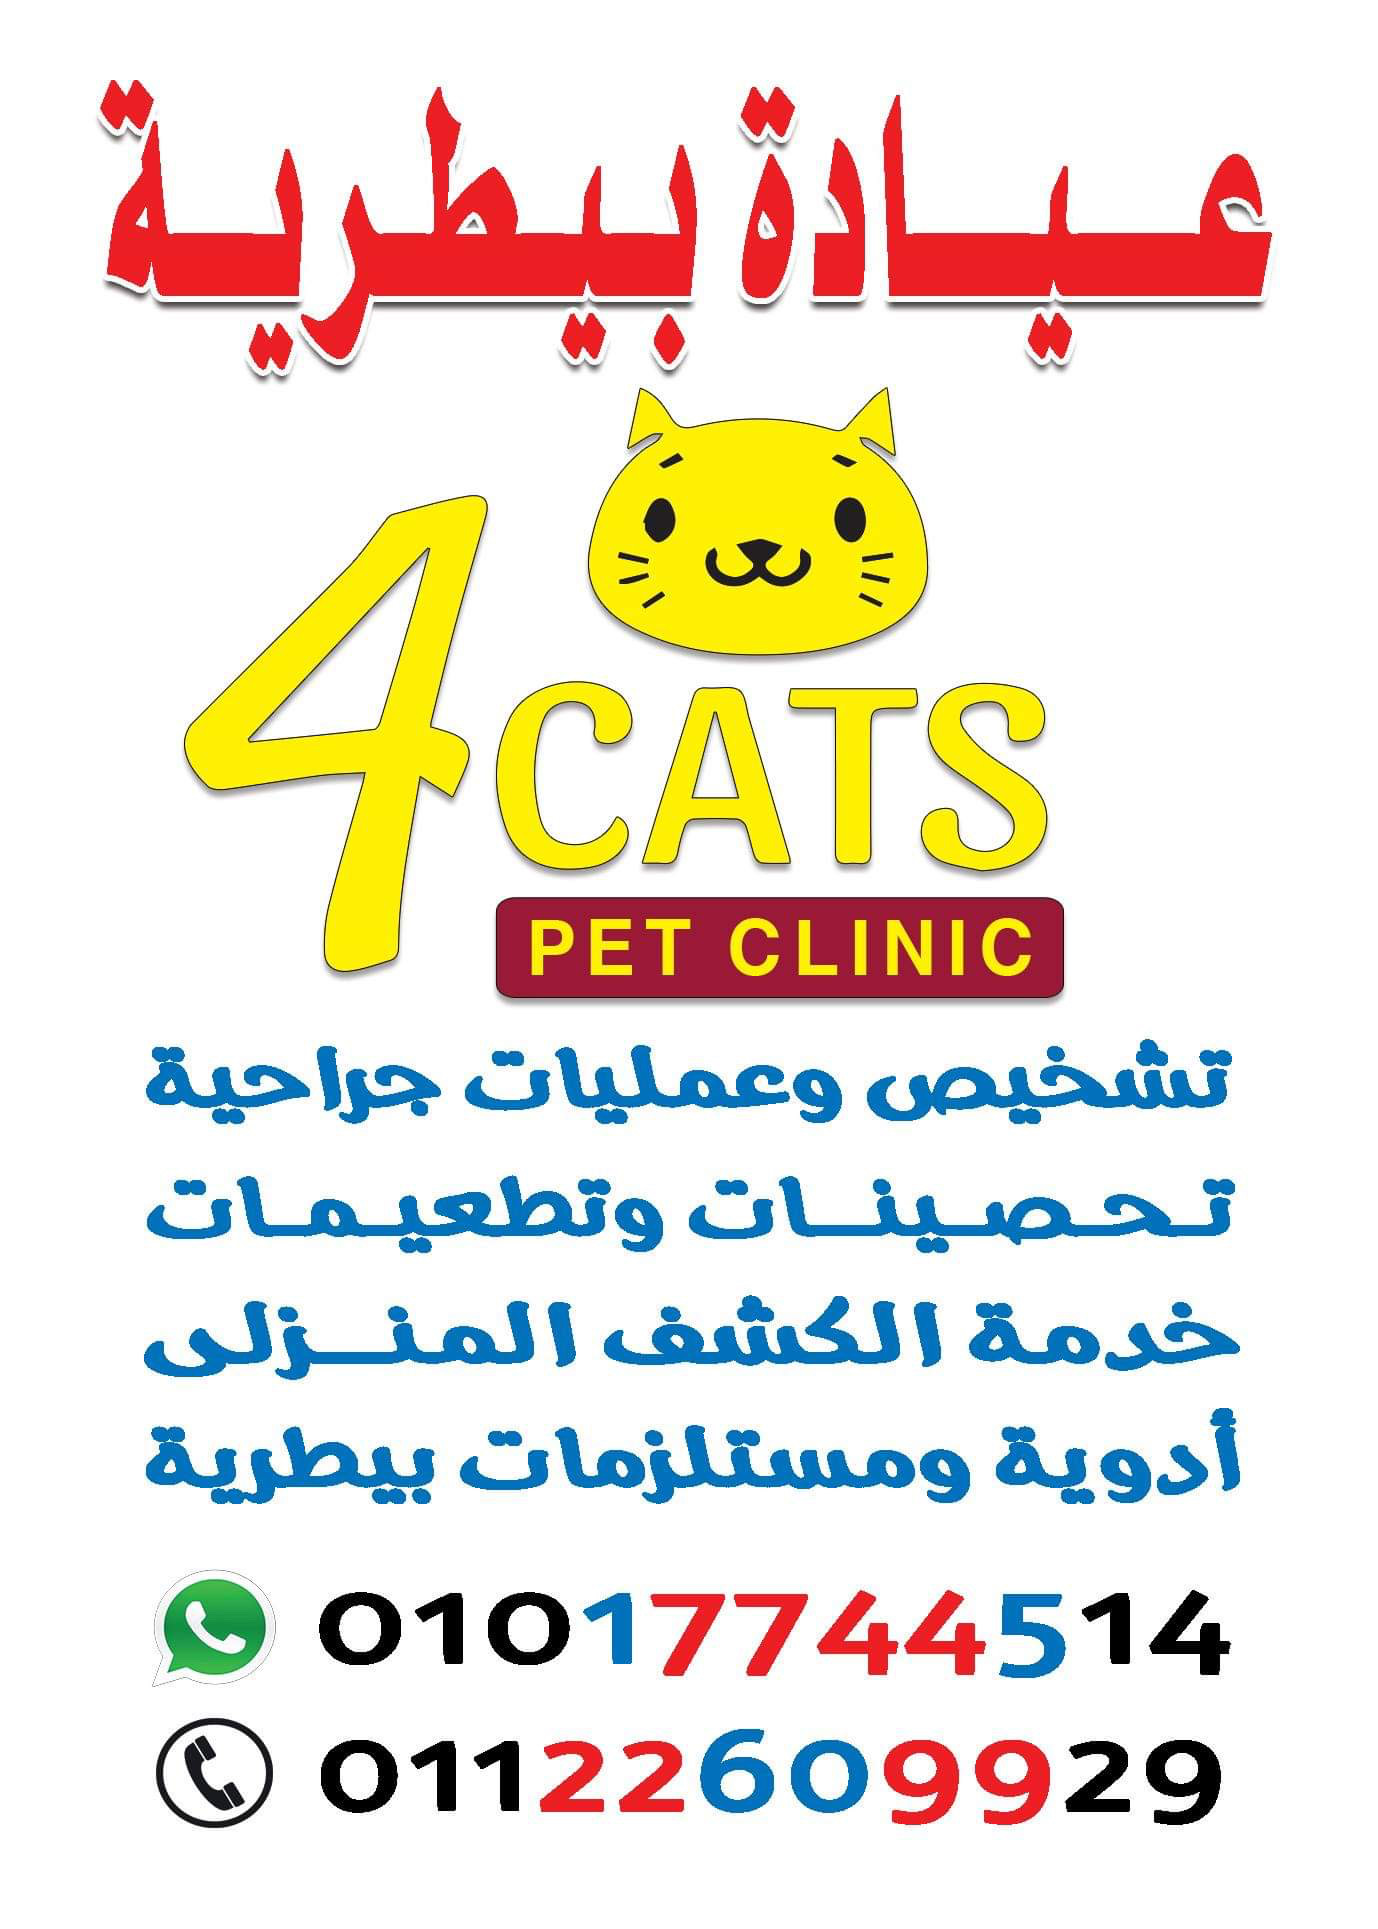 4cats pet clinic